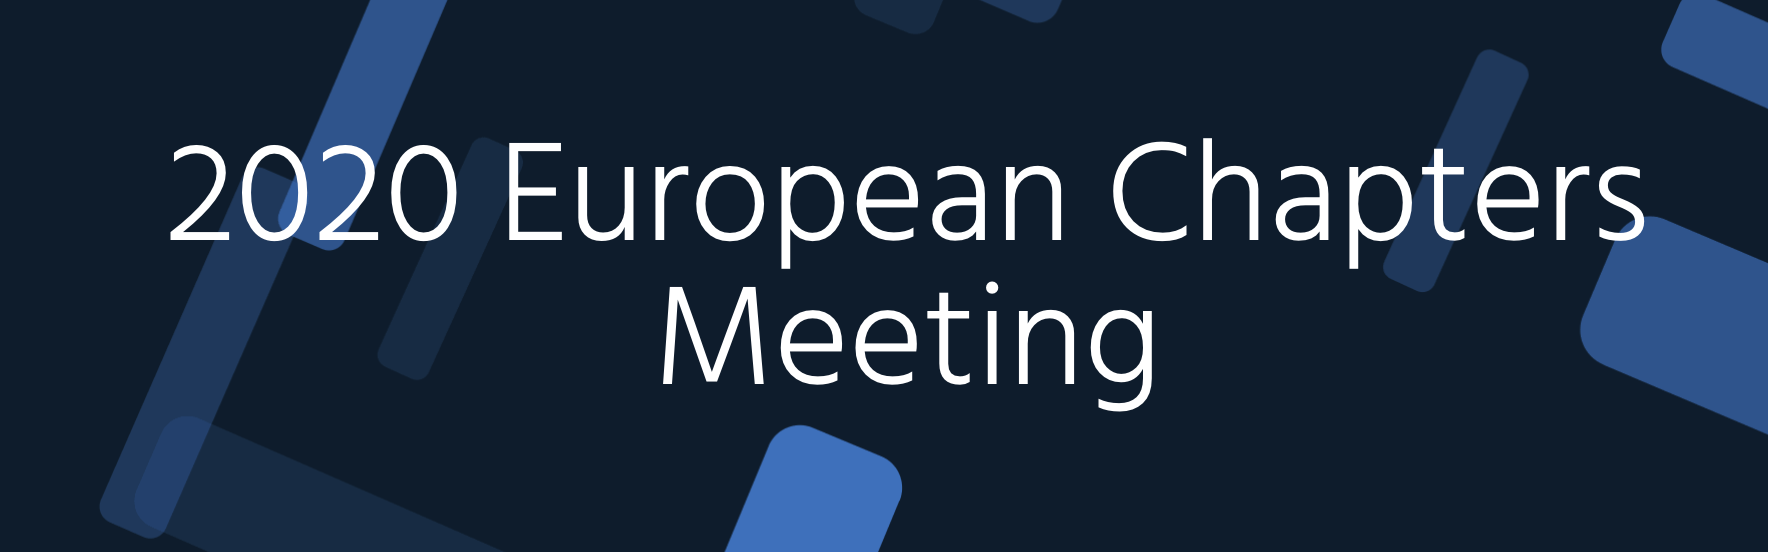 2020 European Chapters Workshop